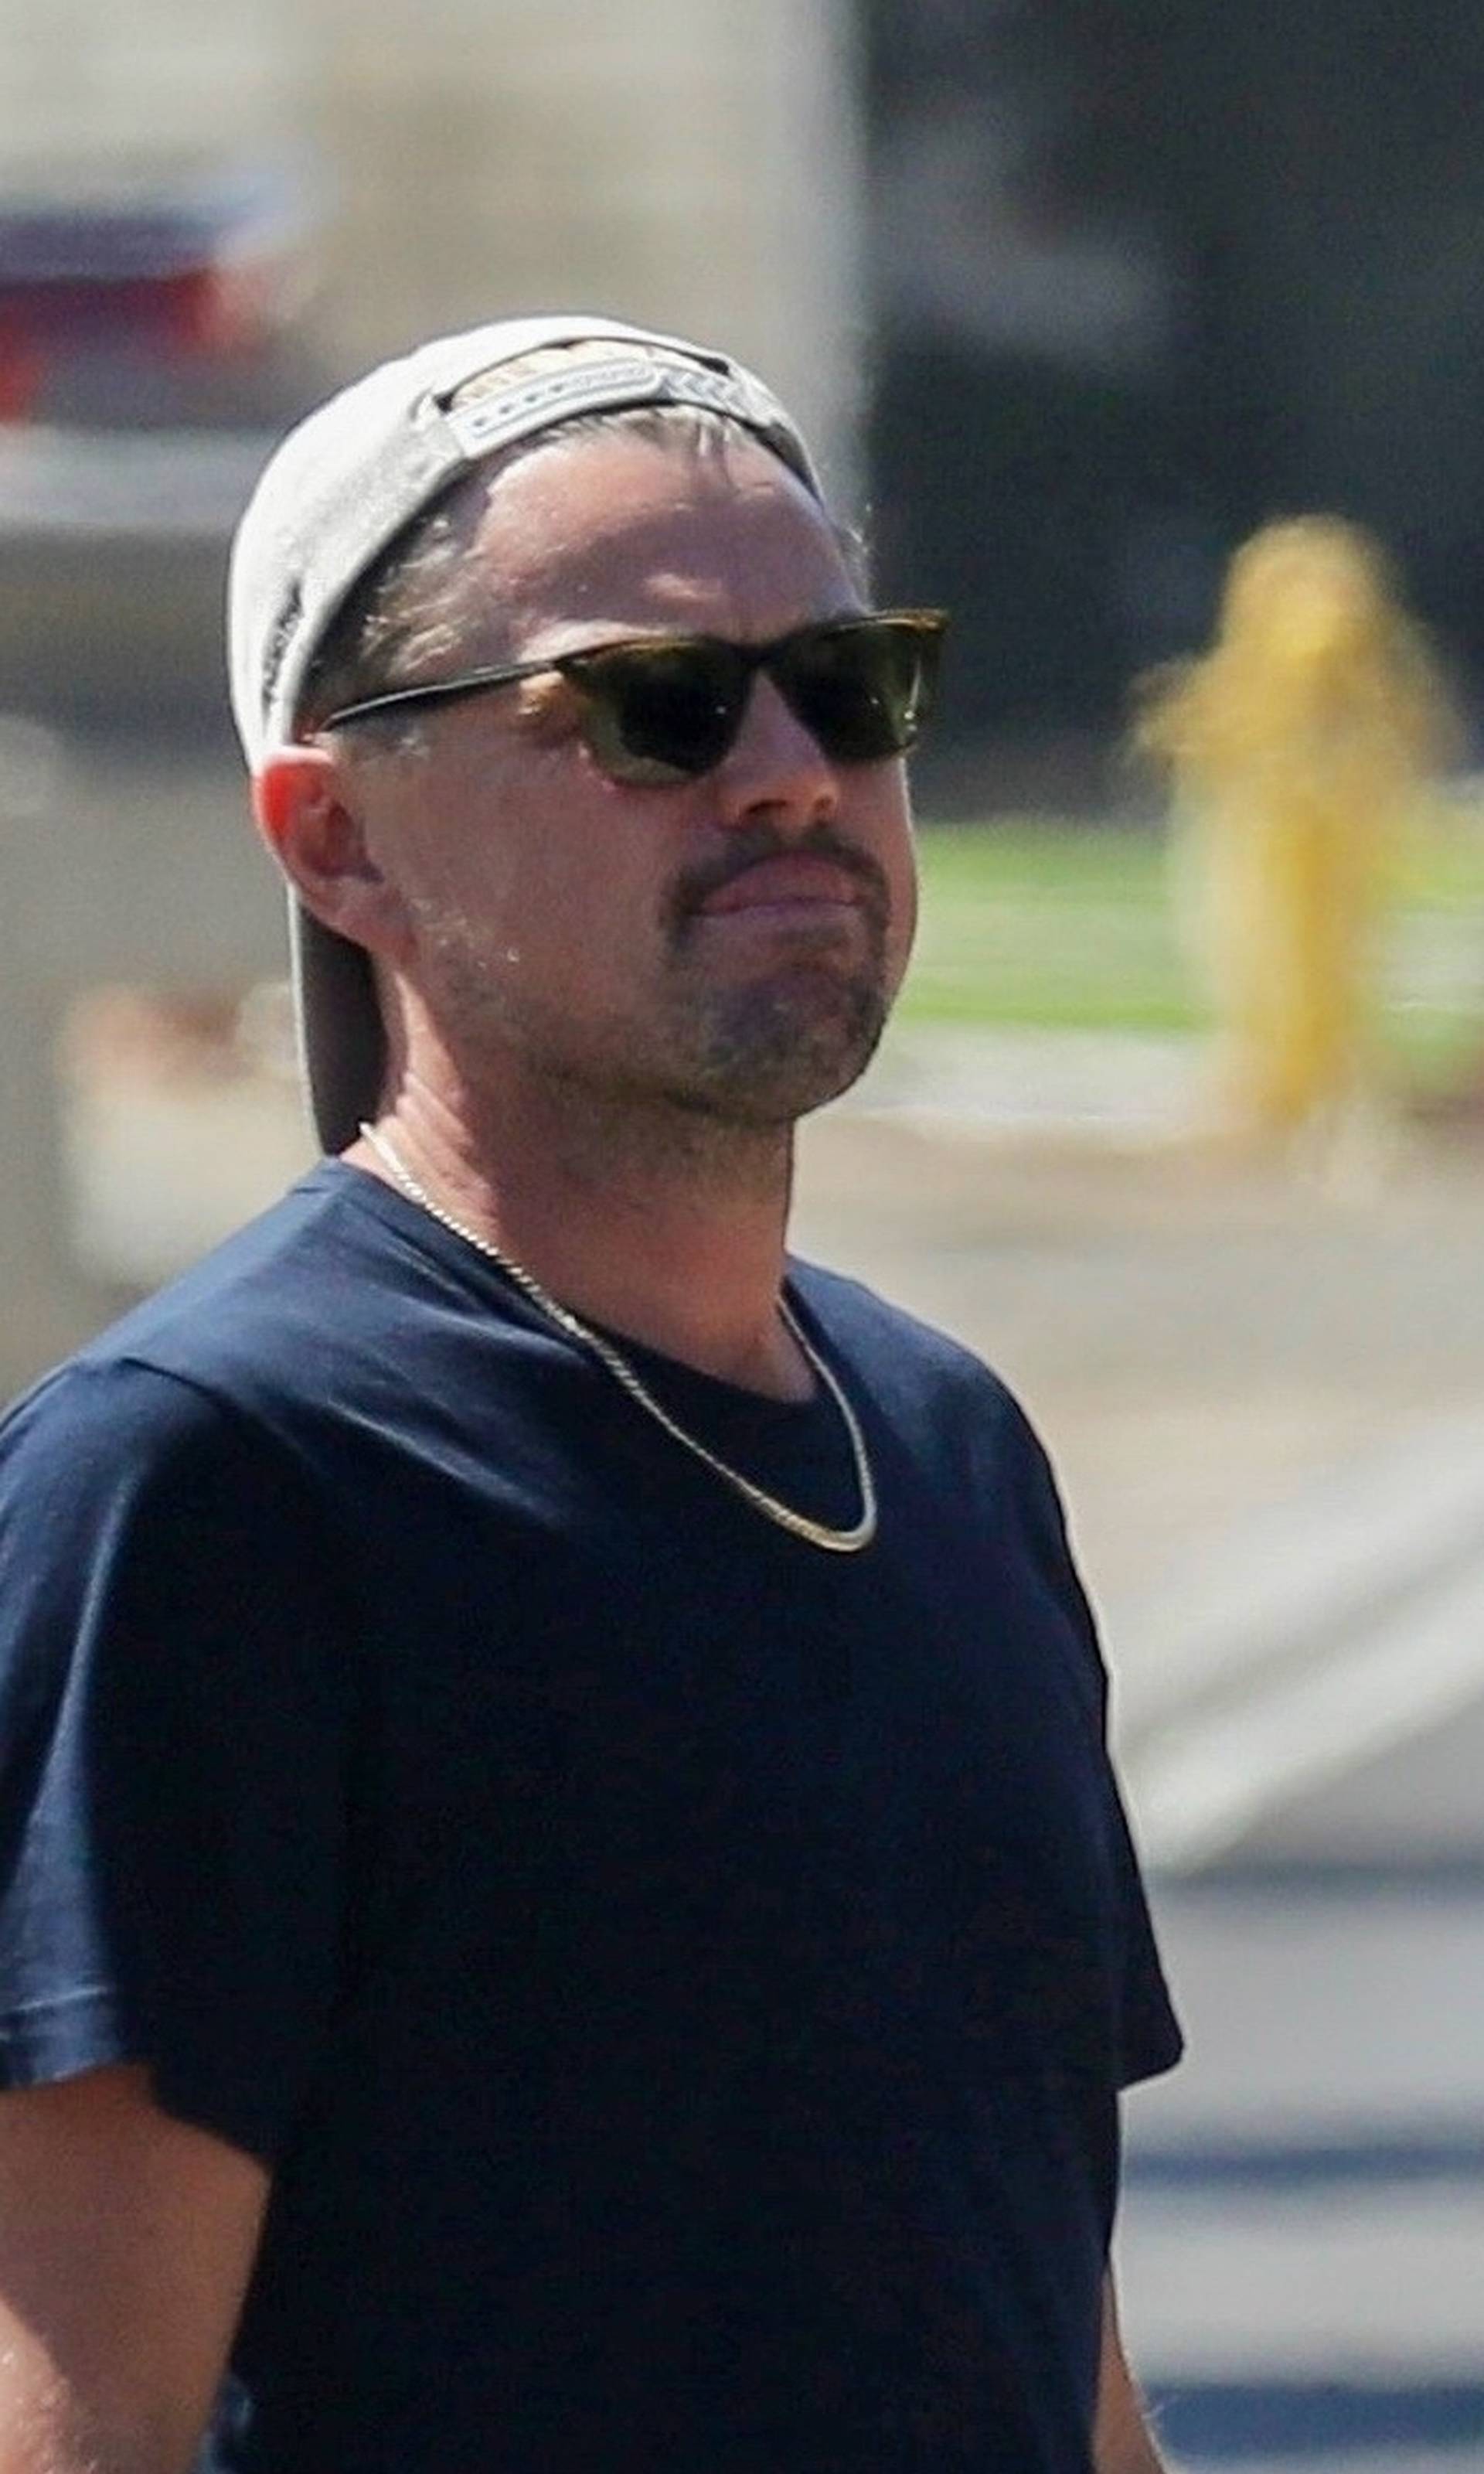 *EXCLUSIVE* Leonardo DiCaprio leaves solo from a small party in Malibu